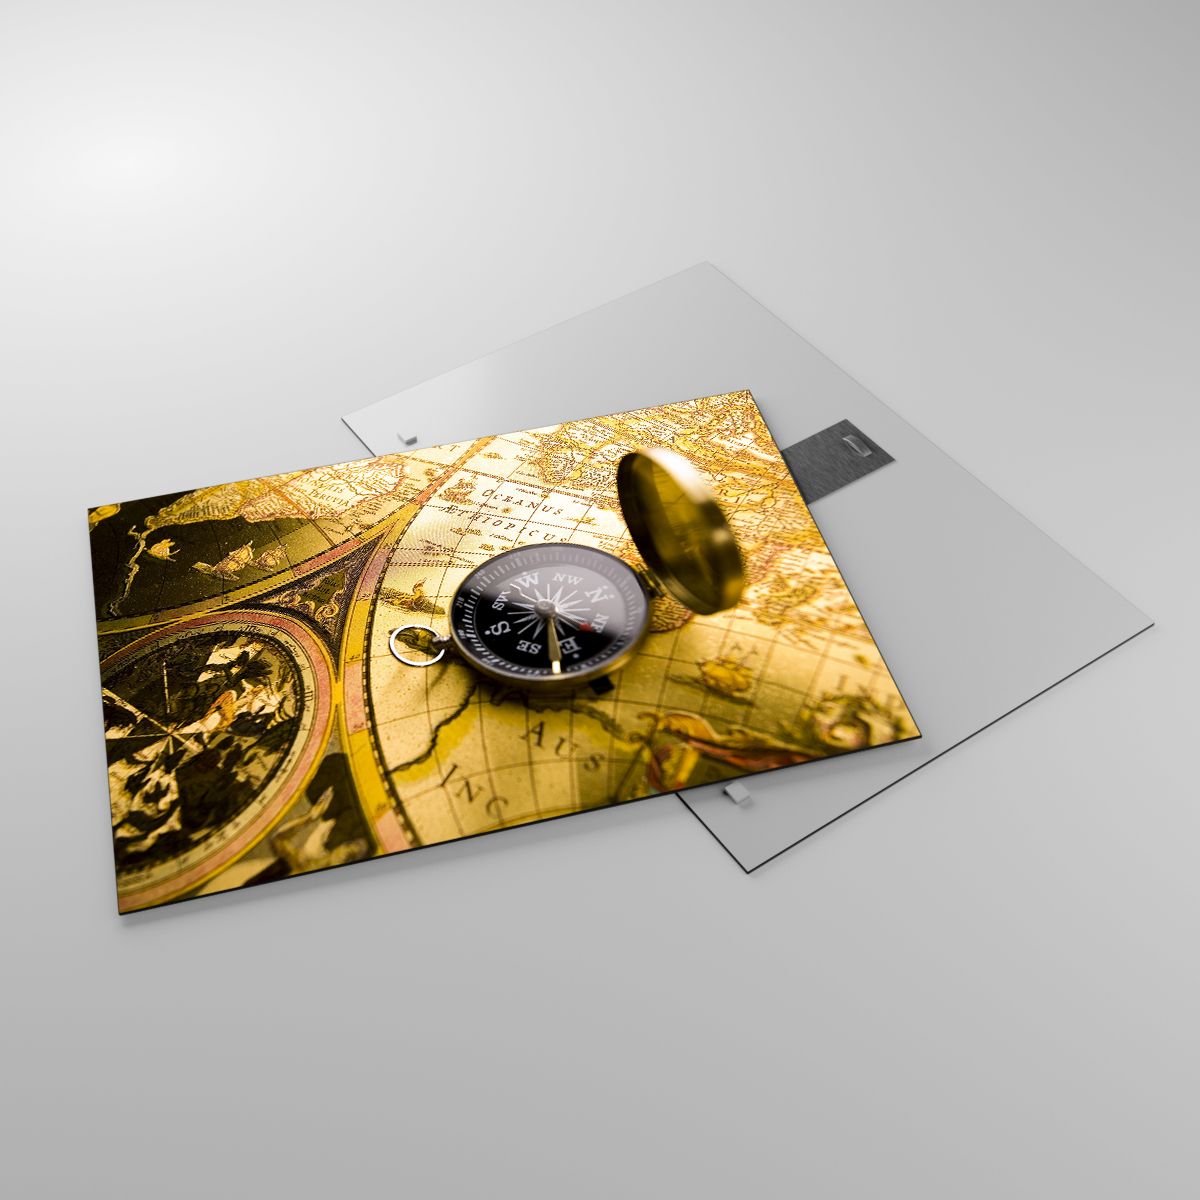 Glasbild  Reisen, Glasbild Weltkarten, Glasbild Kompass, Glasbild Jahrgang, Glasbild Goldene Karte